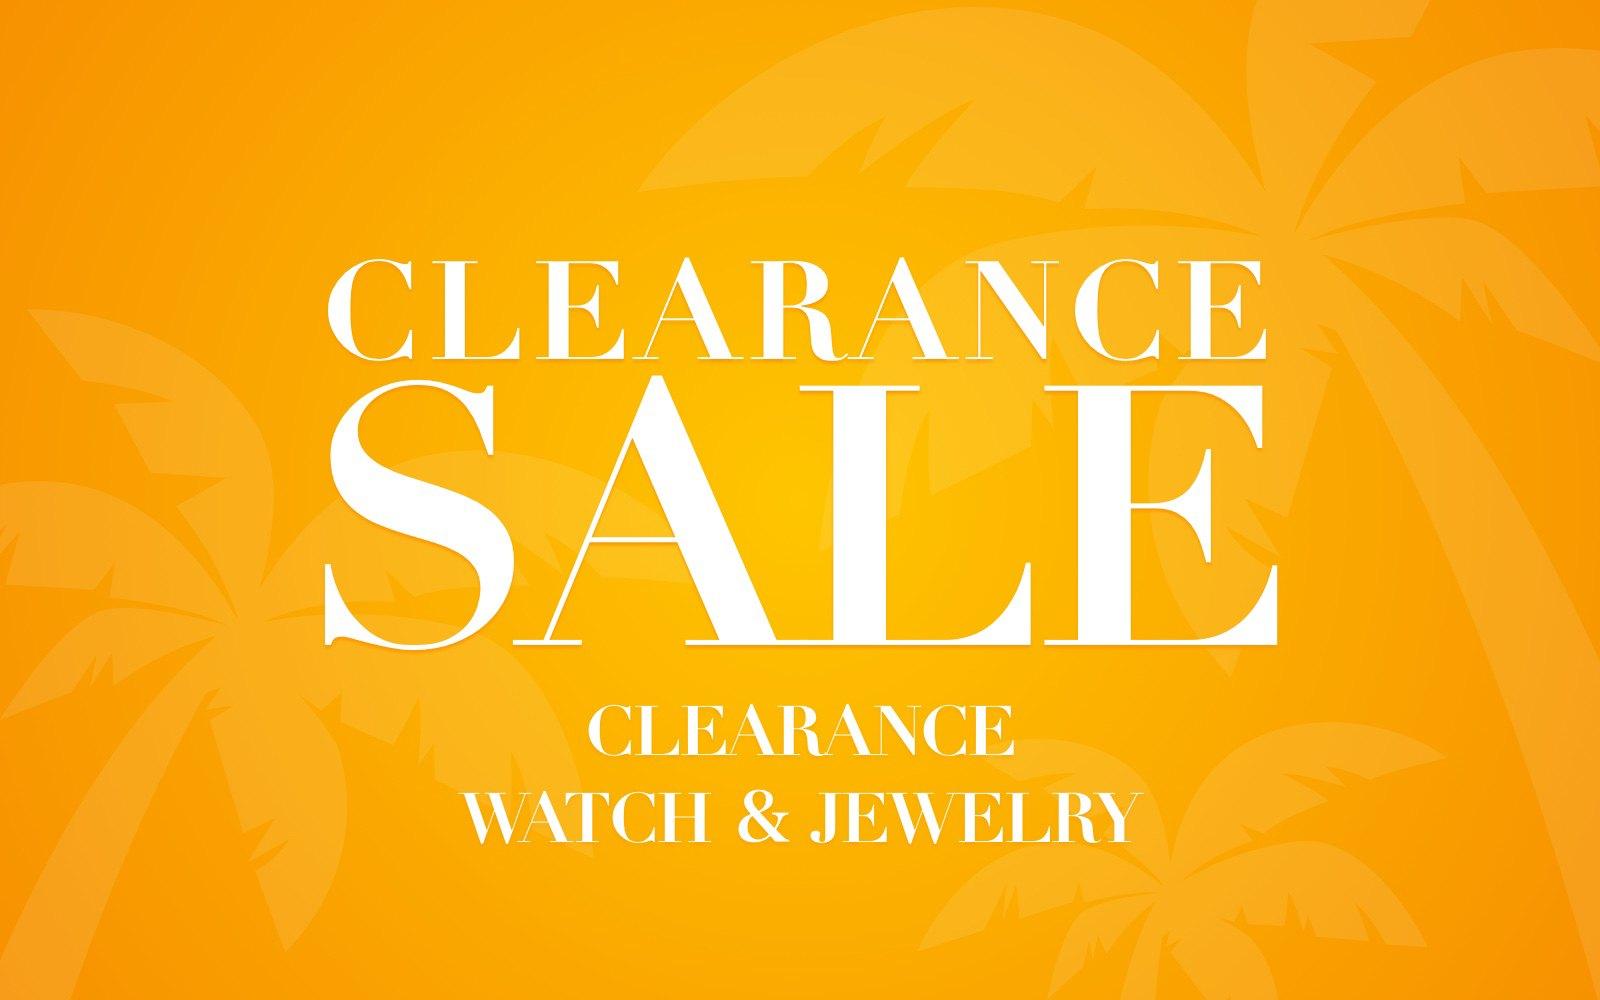 Clearance Watch & Jewelry